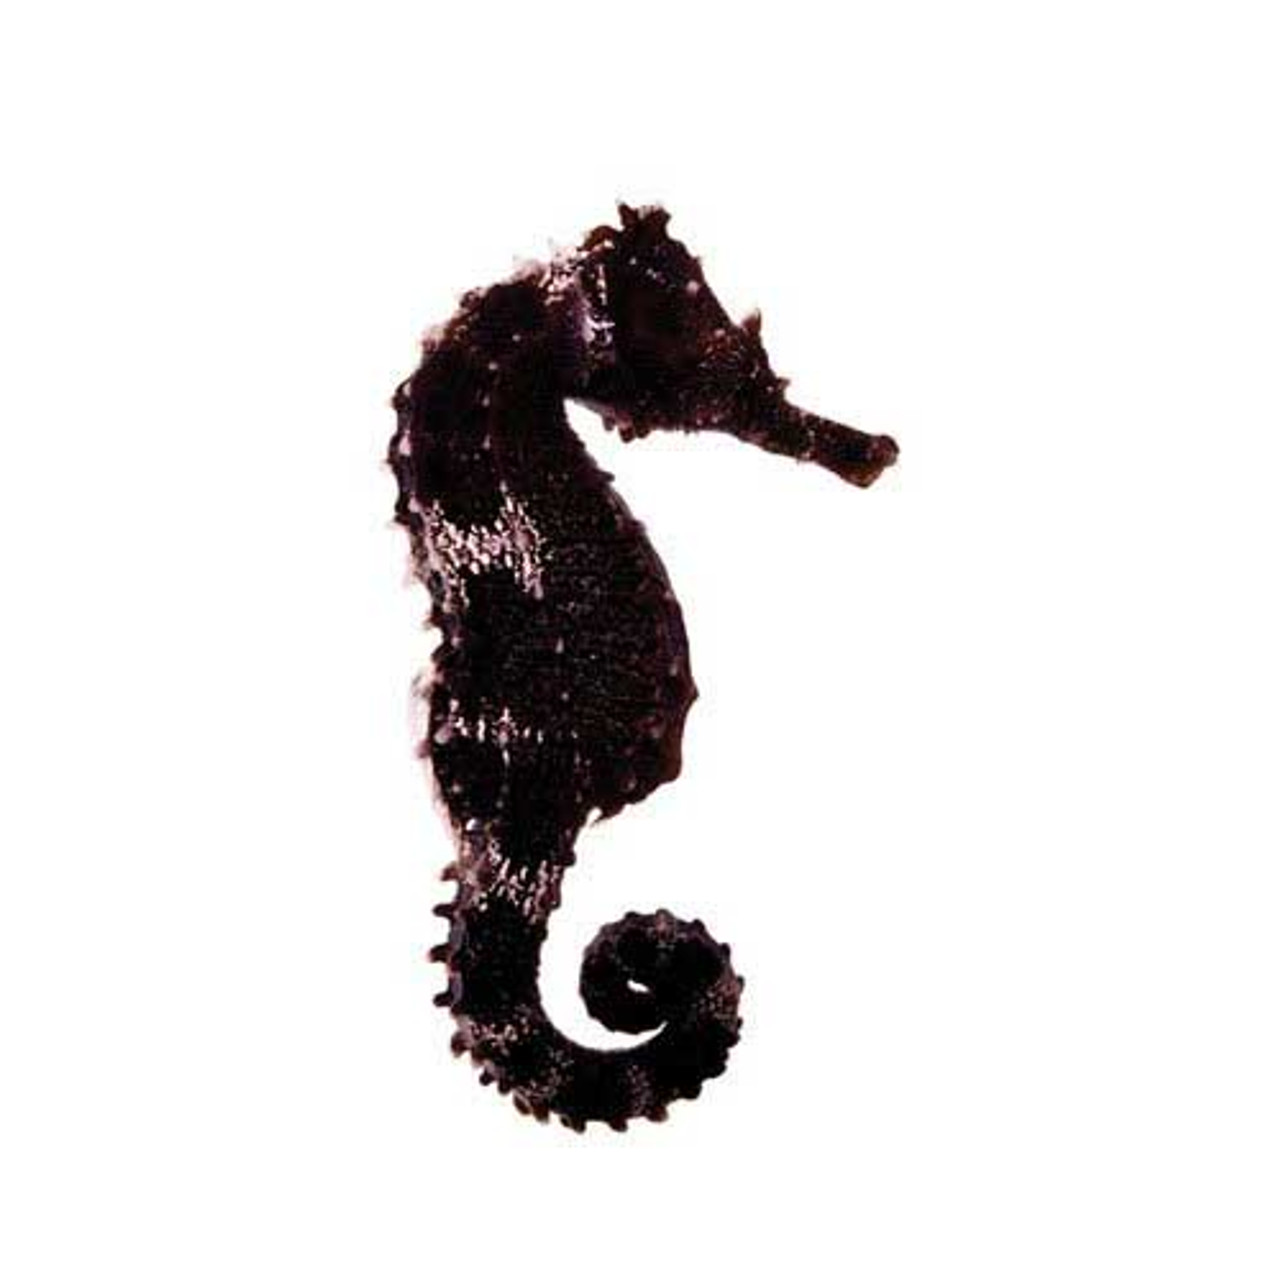 Captive-Bred Lined Seahorse - Unsexed (Hippocampus erectus) - ORA